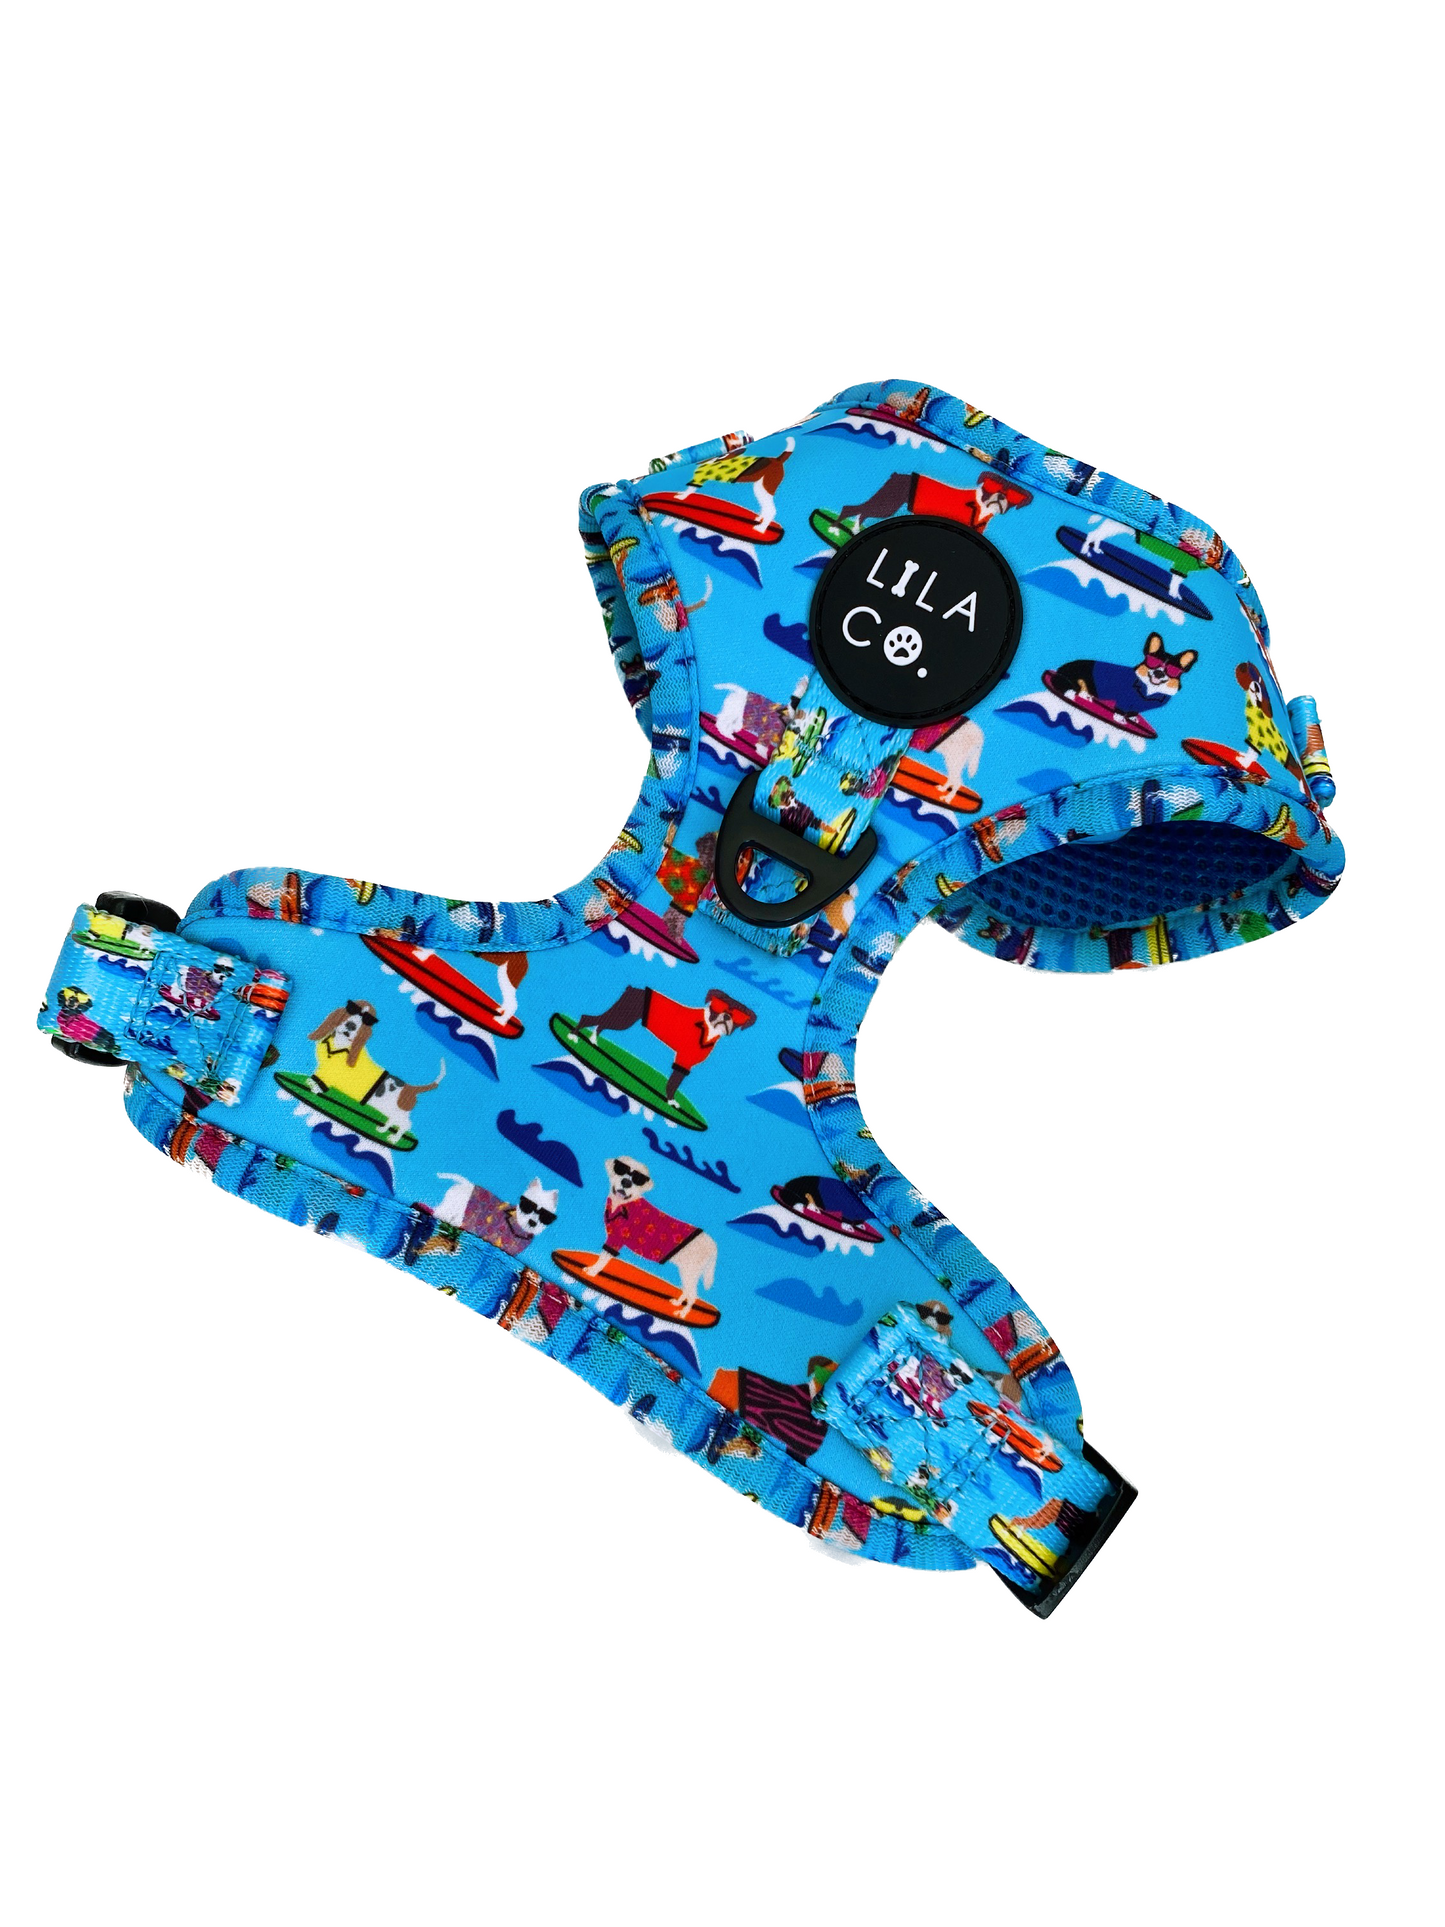 
                  
                     Blue Surf Dogs Print Adjustable Dog Harness  Australia Pet Supplies Australia Dog Accessories Pet Accessories 
                  
                